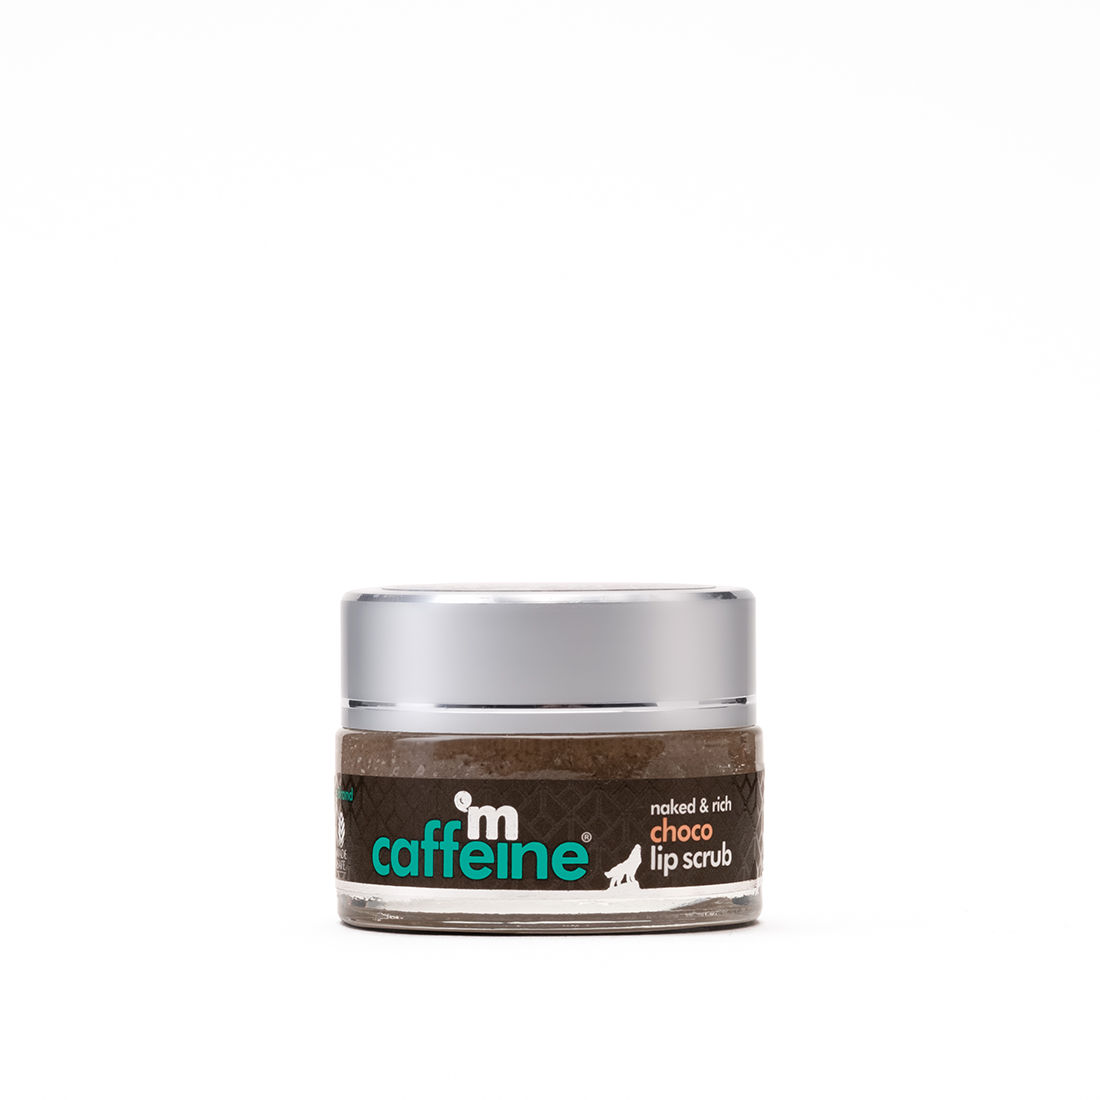 Free mCaffeine Choco Lip Scrub for Chapped & Sensitive Lips - 100% Vegan (12gm)